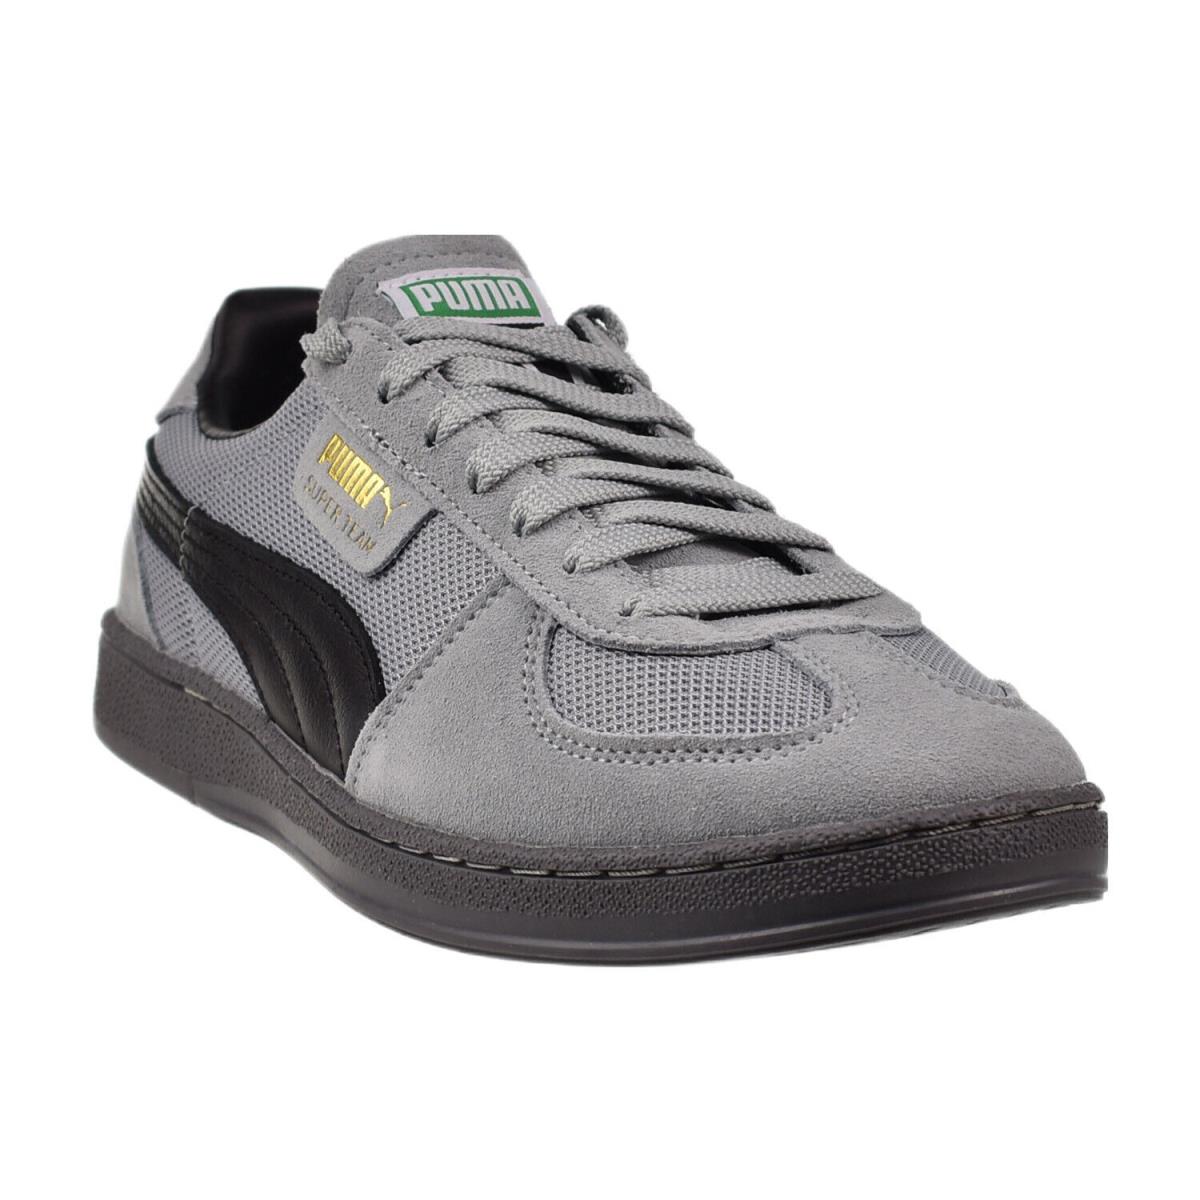 Puma Super Team OG Men`s Shoes Cool Mid Gray-puma Black 390424-07 - Cool Mid Gray-Puma Black